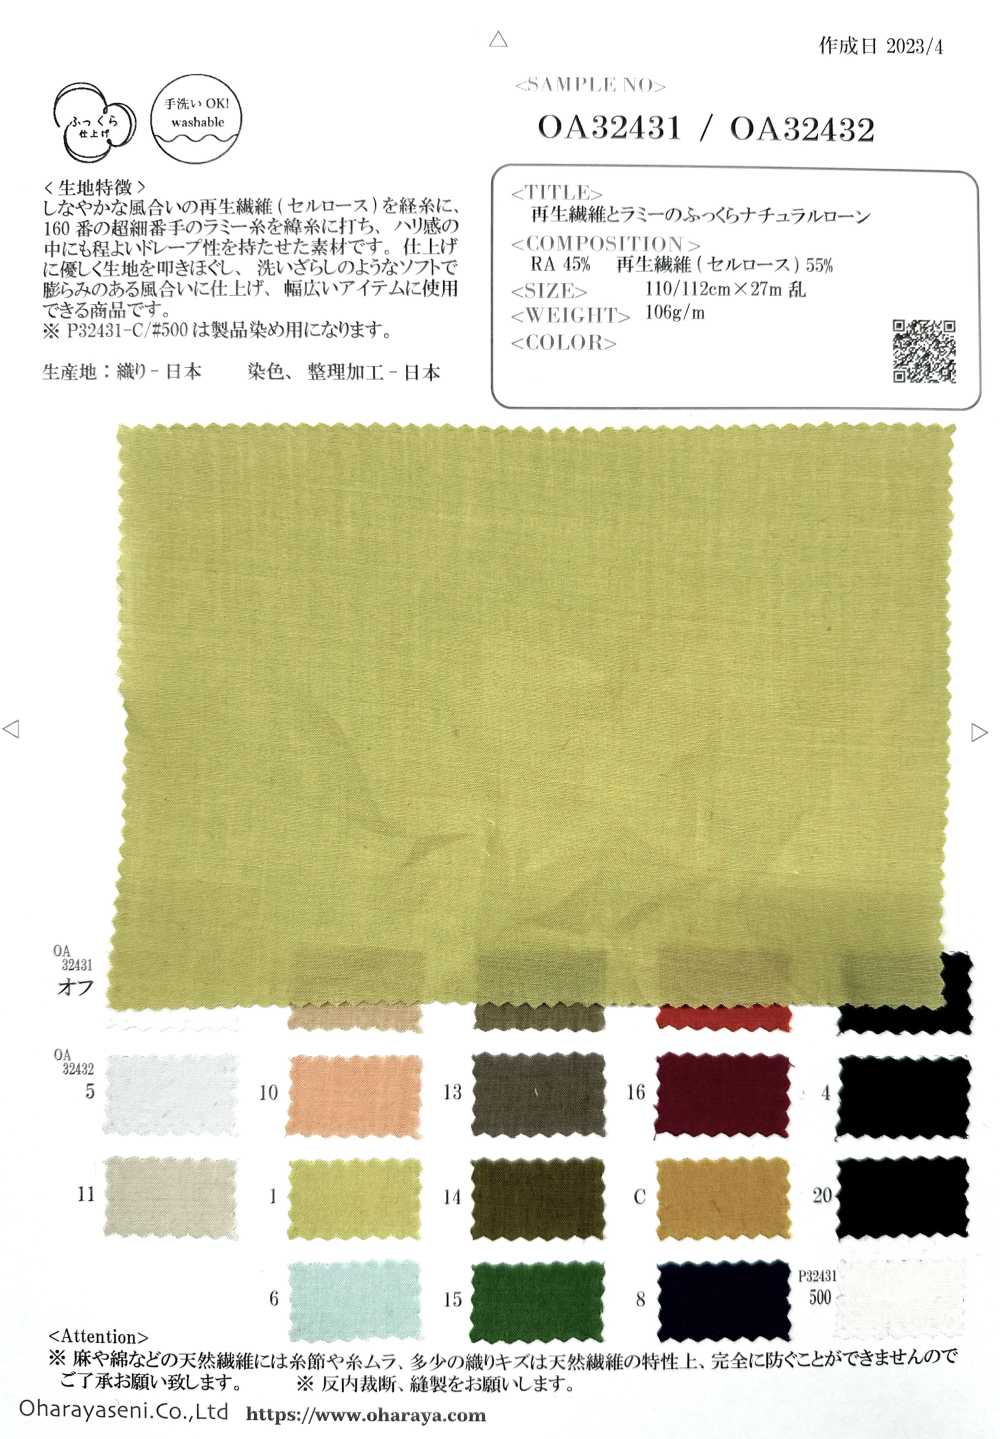 OA32431 Praller Naturrasen Aus Recycelten Fasern Und Ramie[Textilgewebe] Oharayaseni